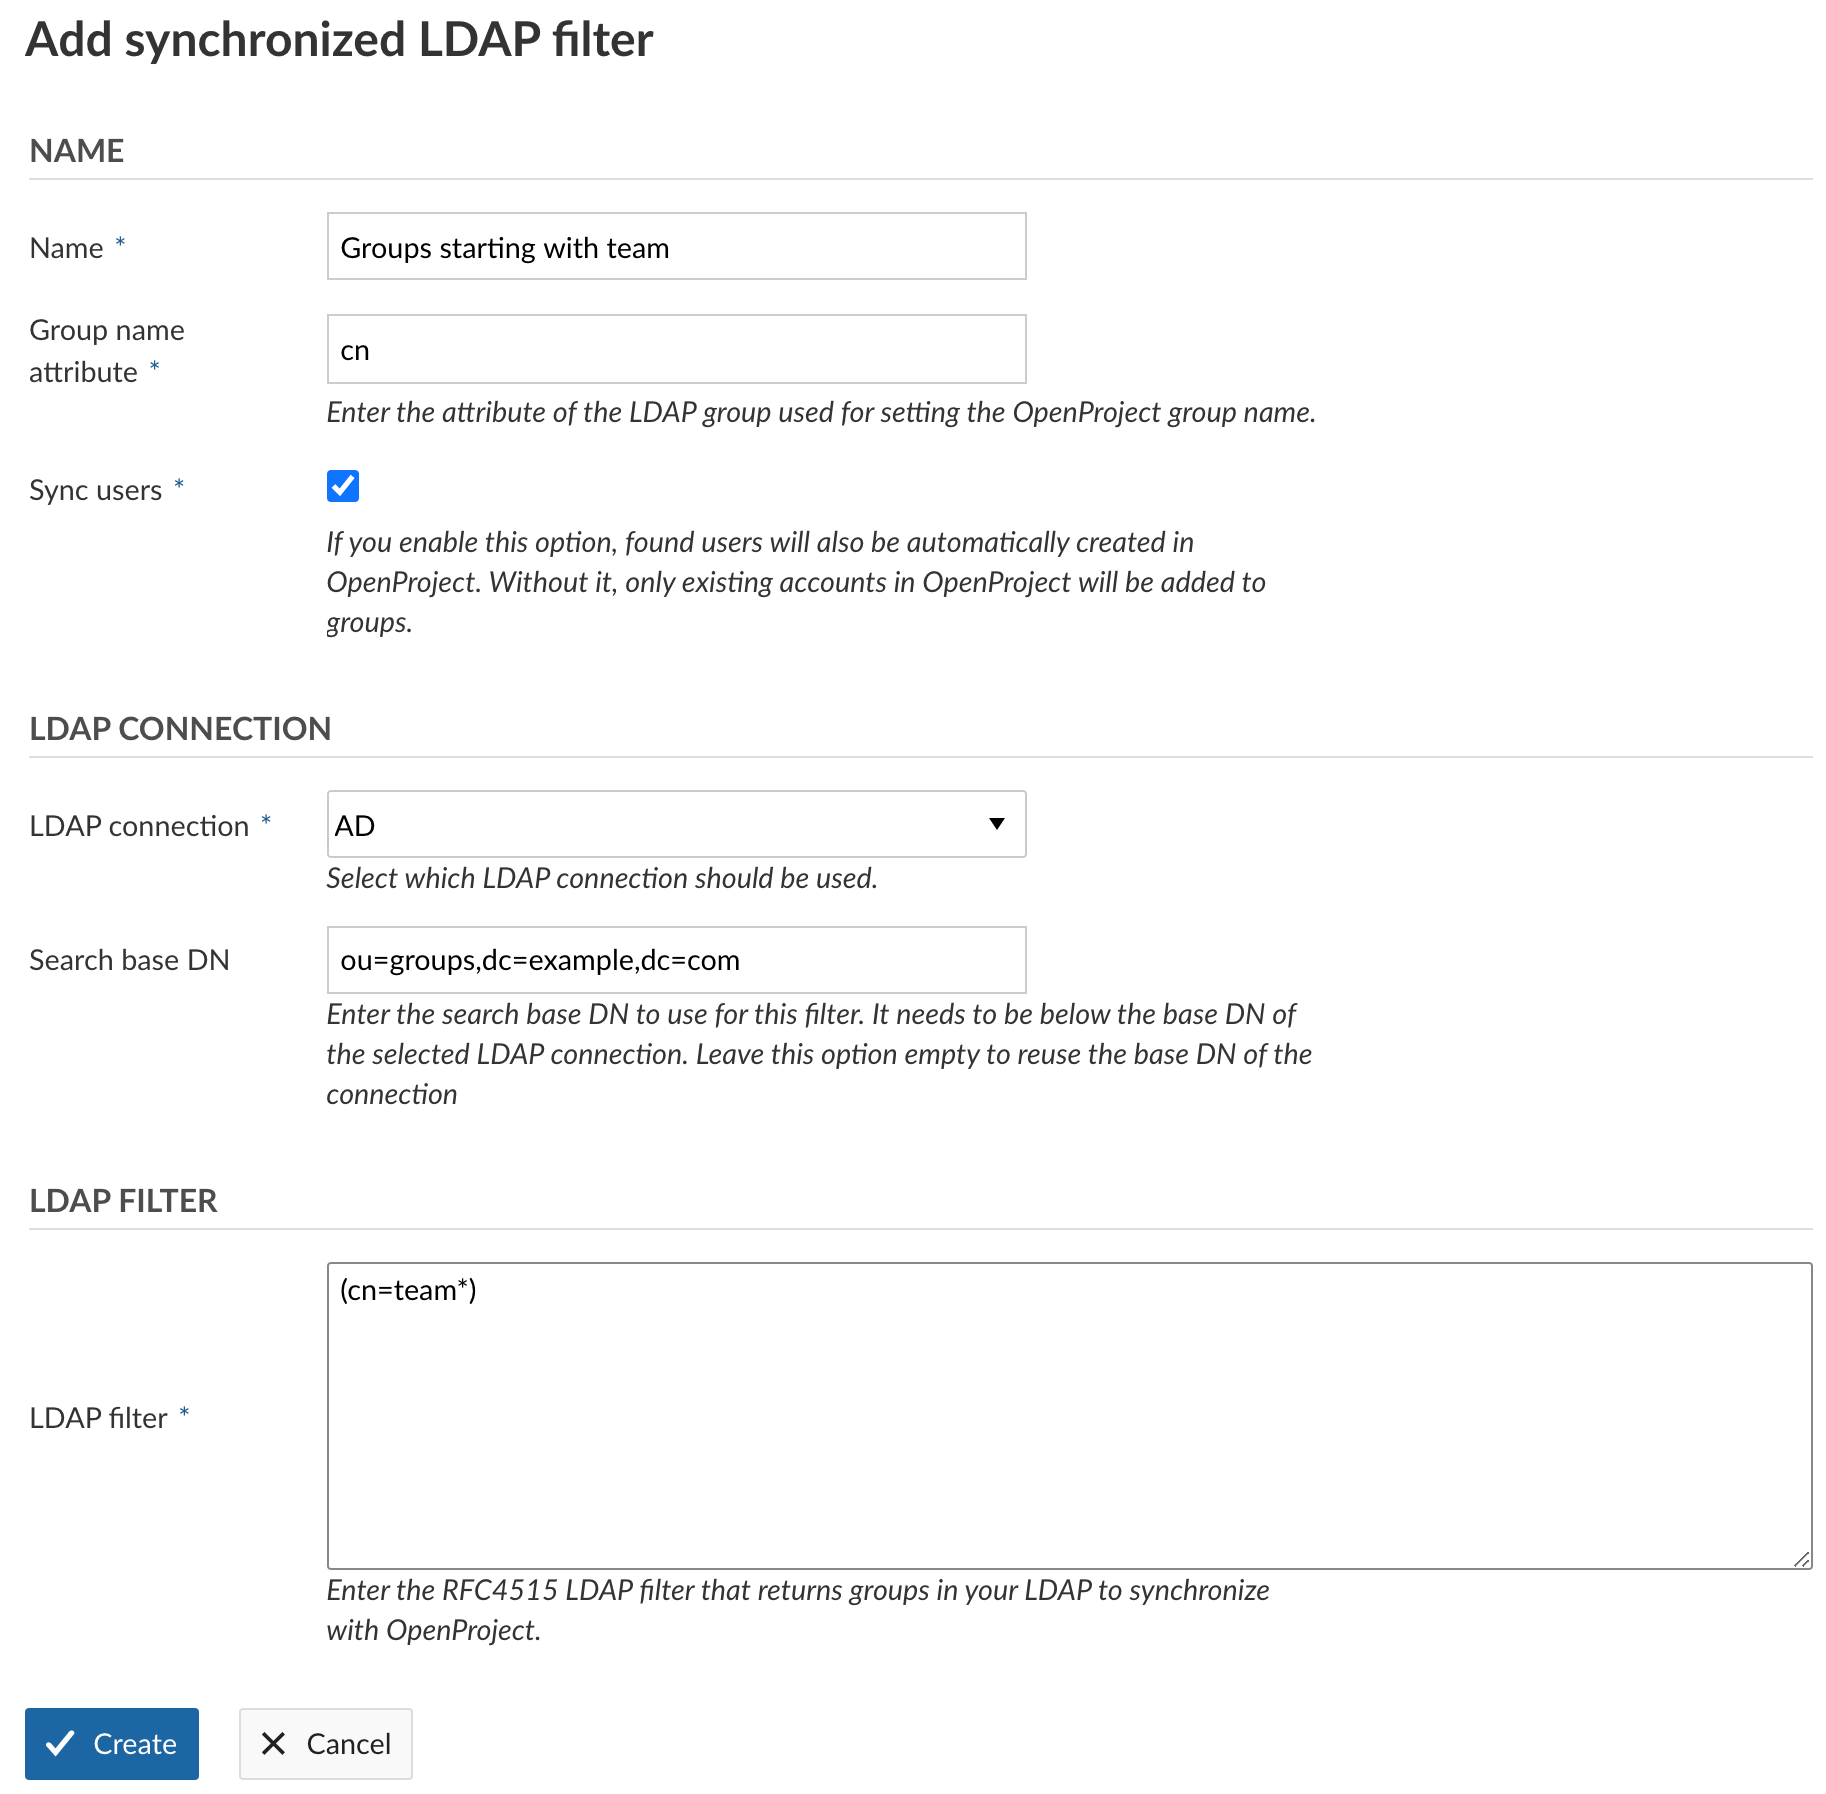 LDAP synchronized filter form